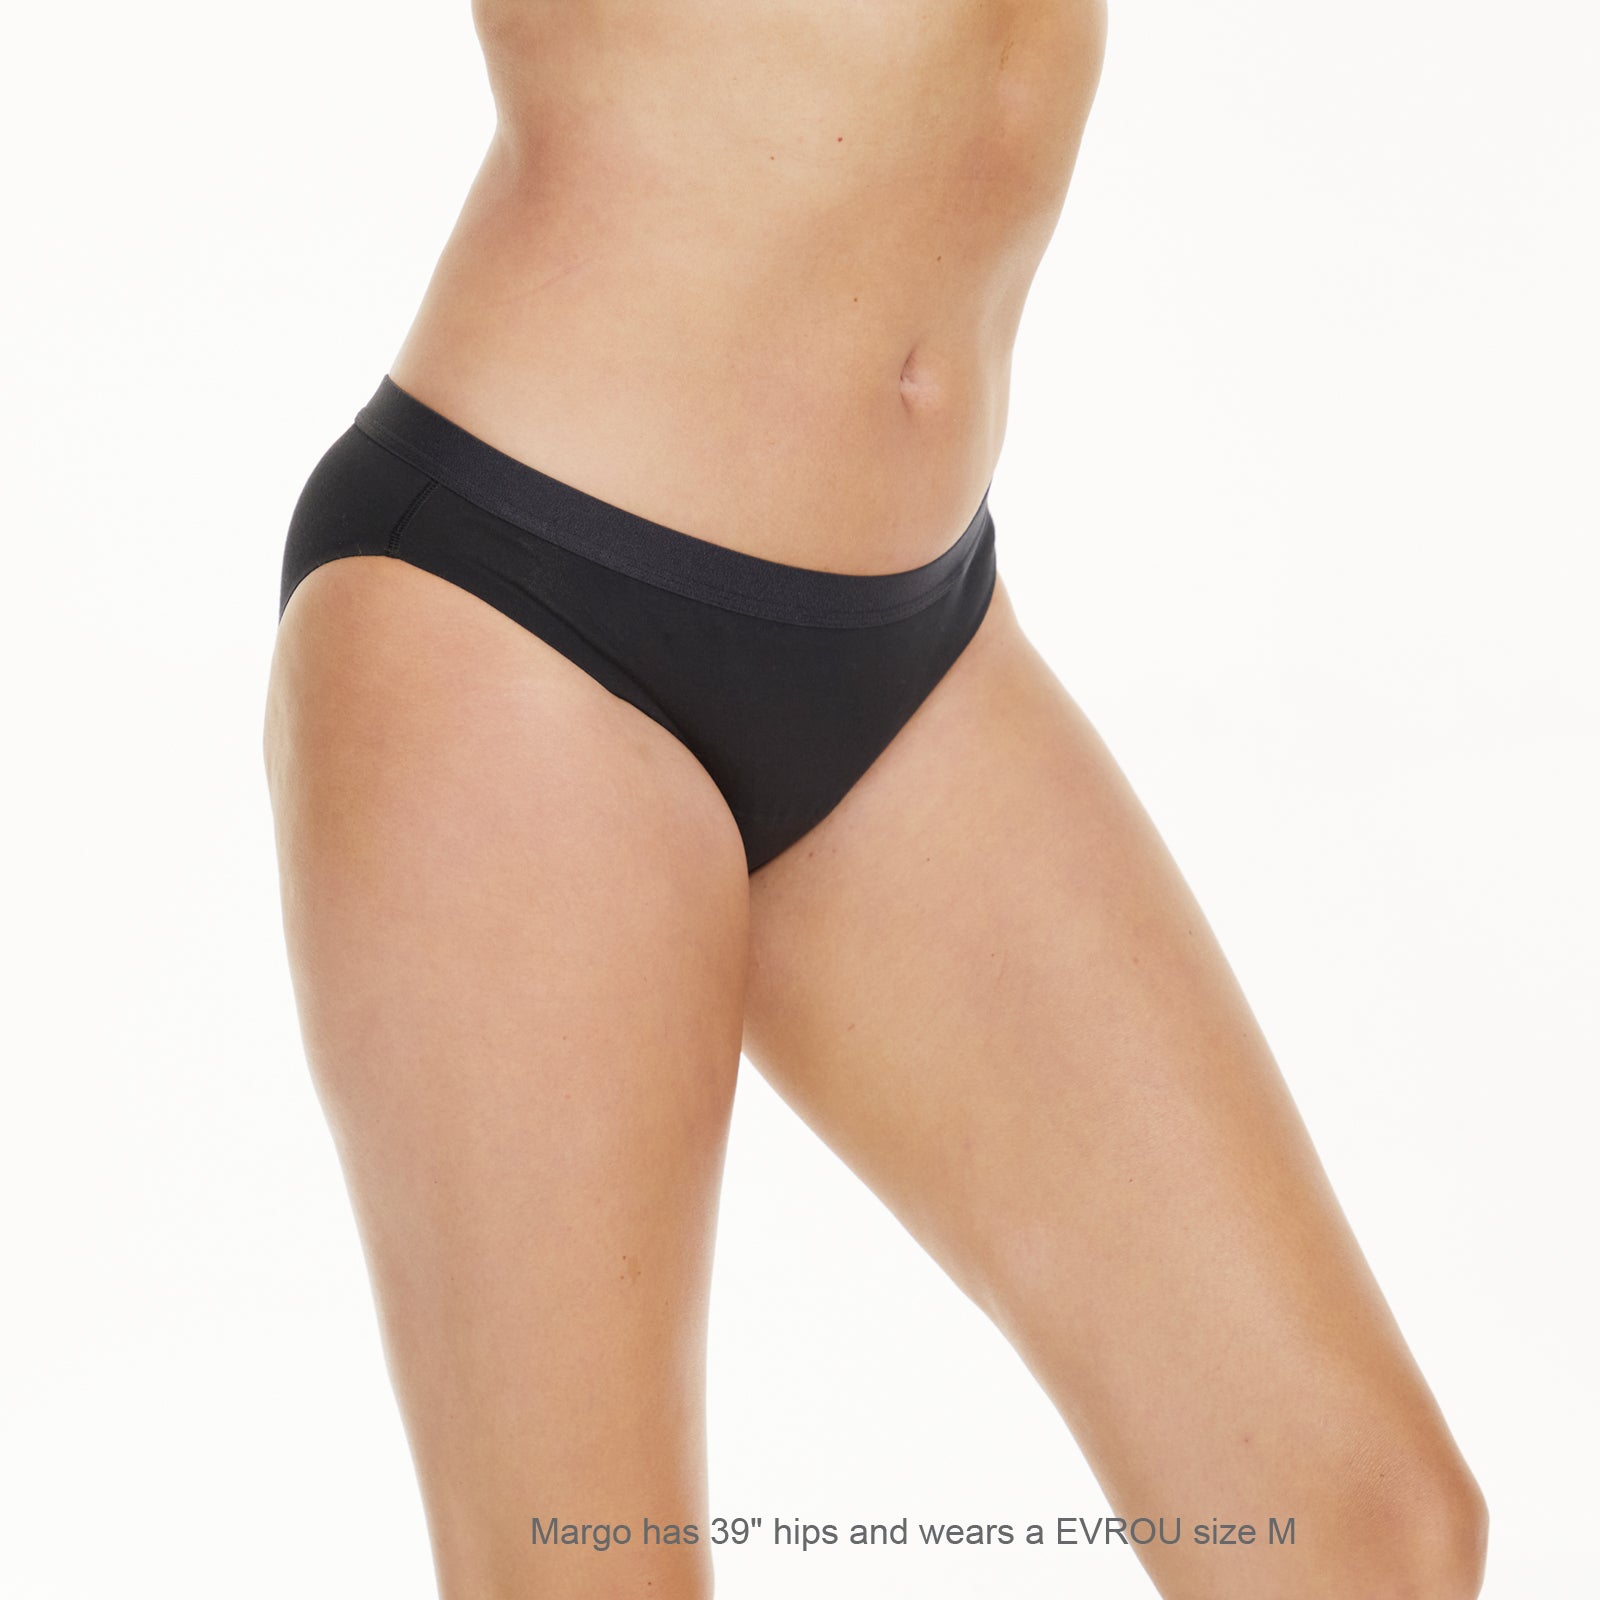 LIQQY Women's 4 Pack No-Show Lingerie Thong Panties Underwear